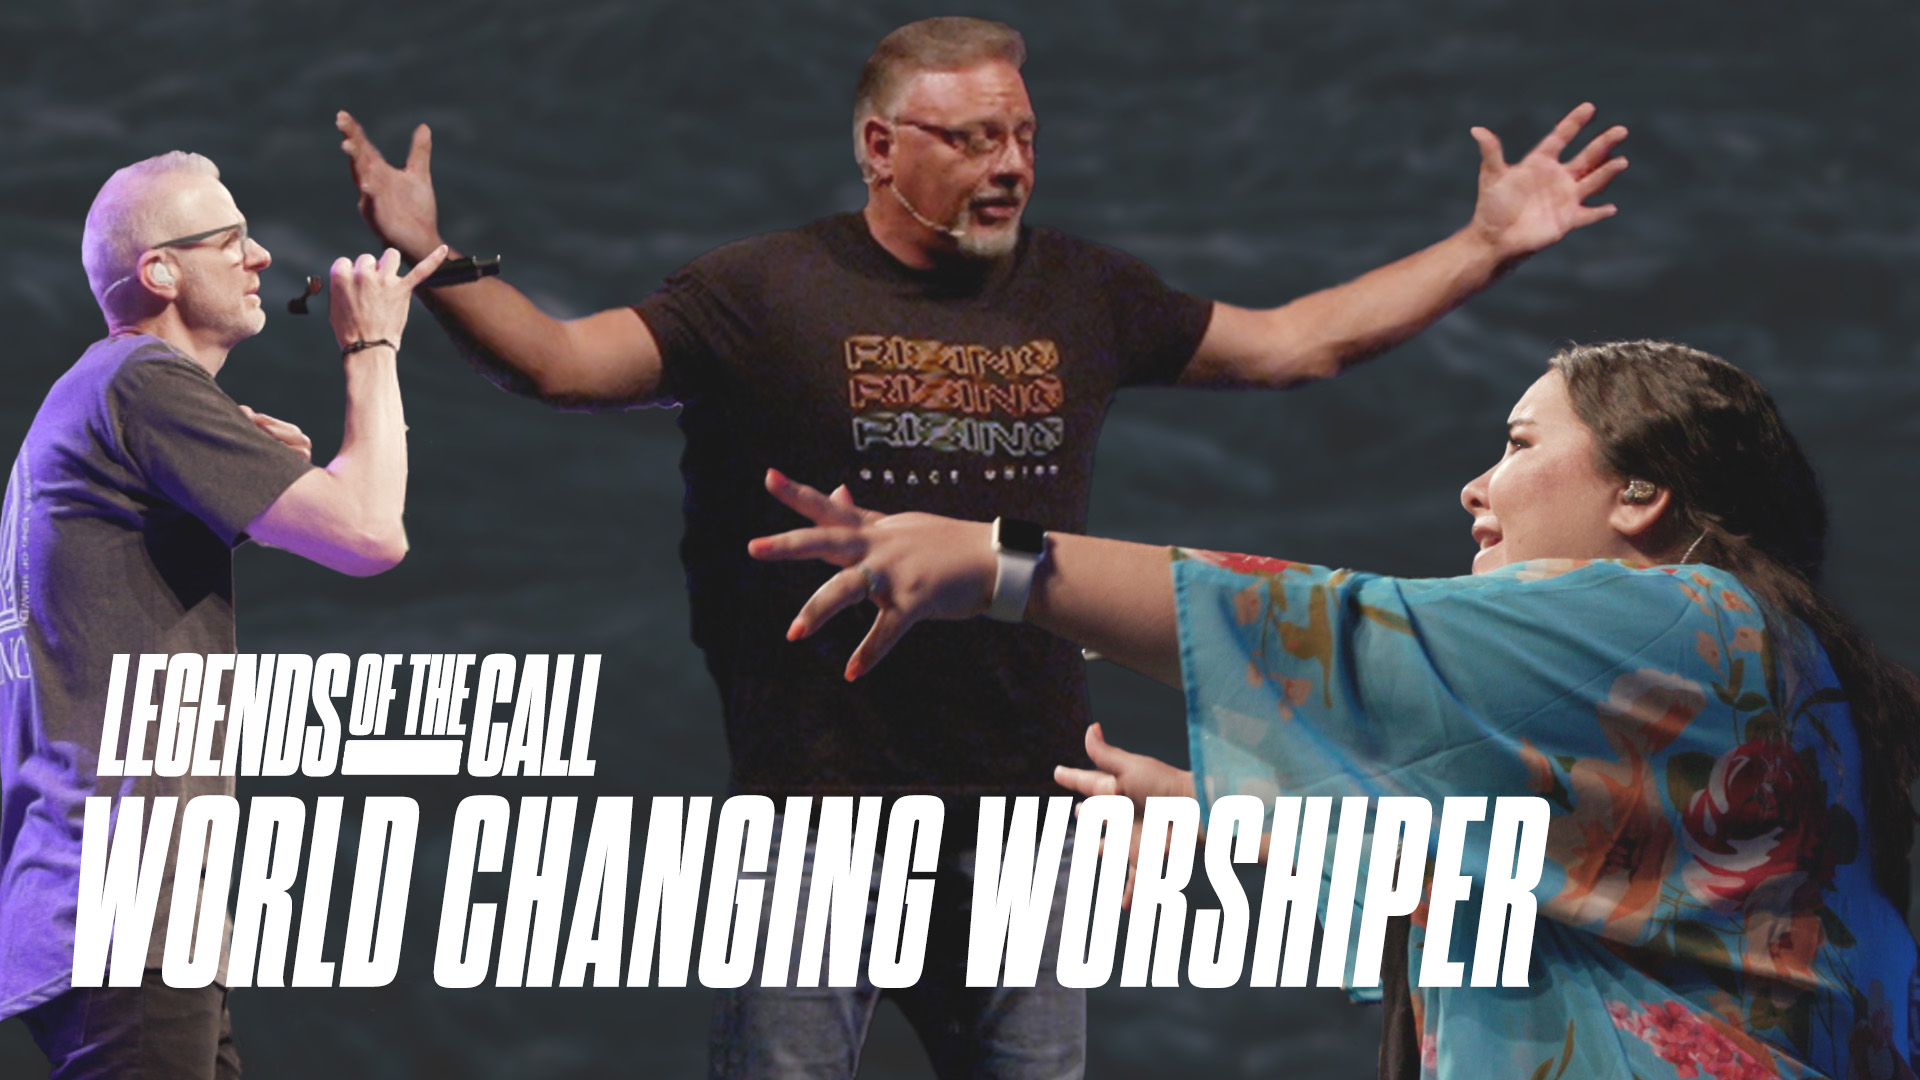 Becoming a World Changing Worshiper